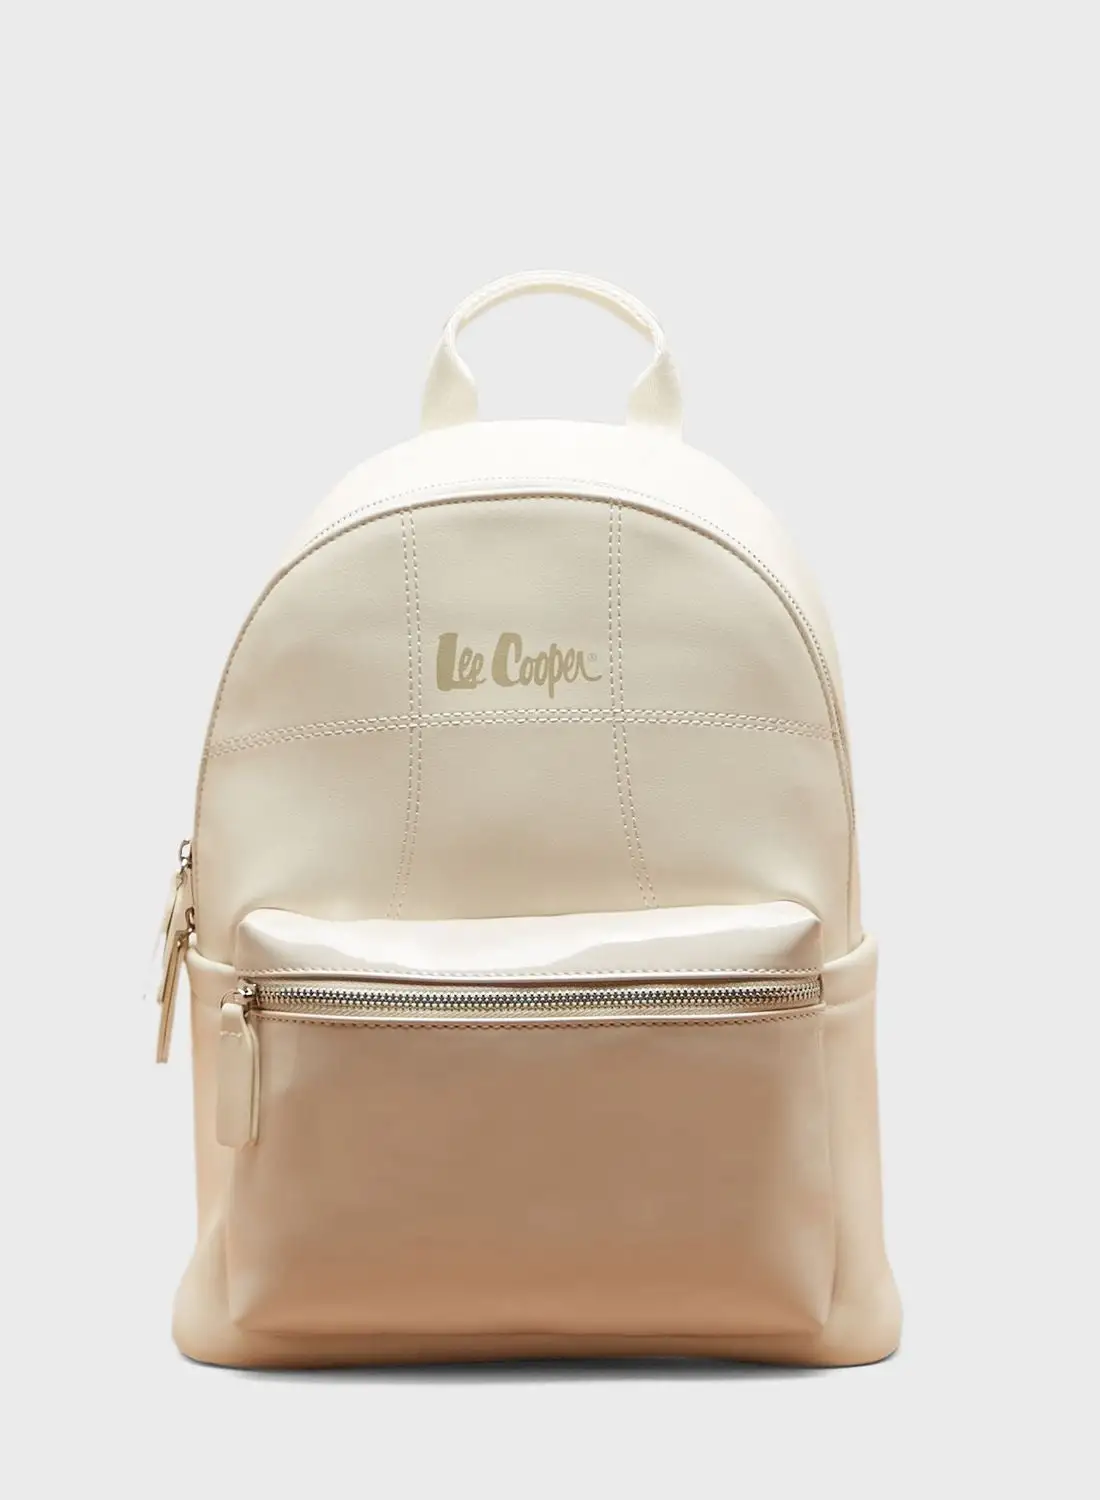 Lee Cooper Top Handle Backpack